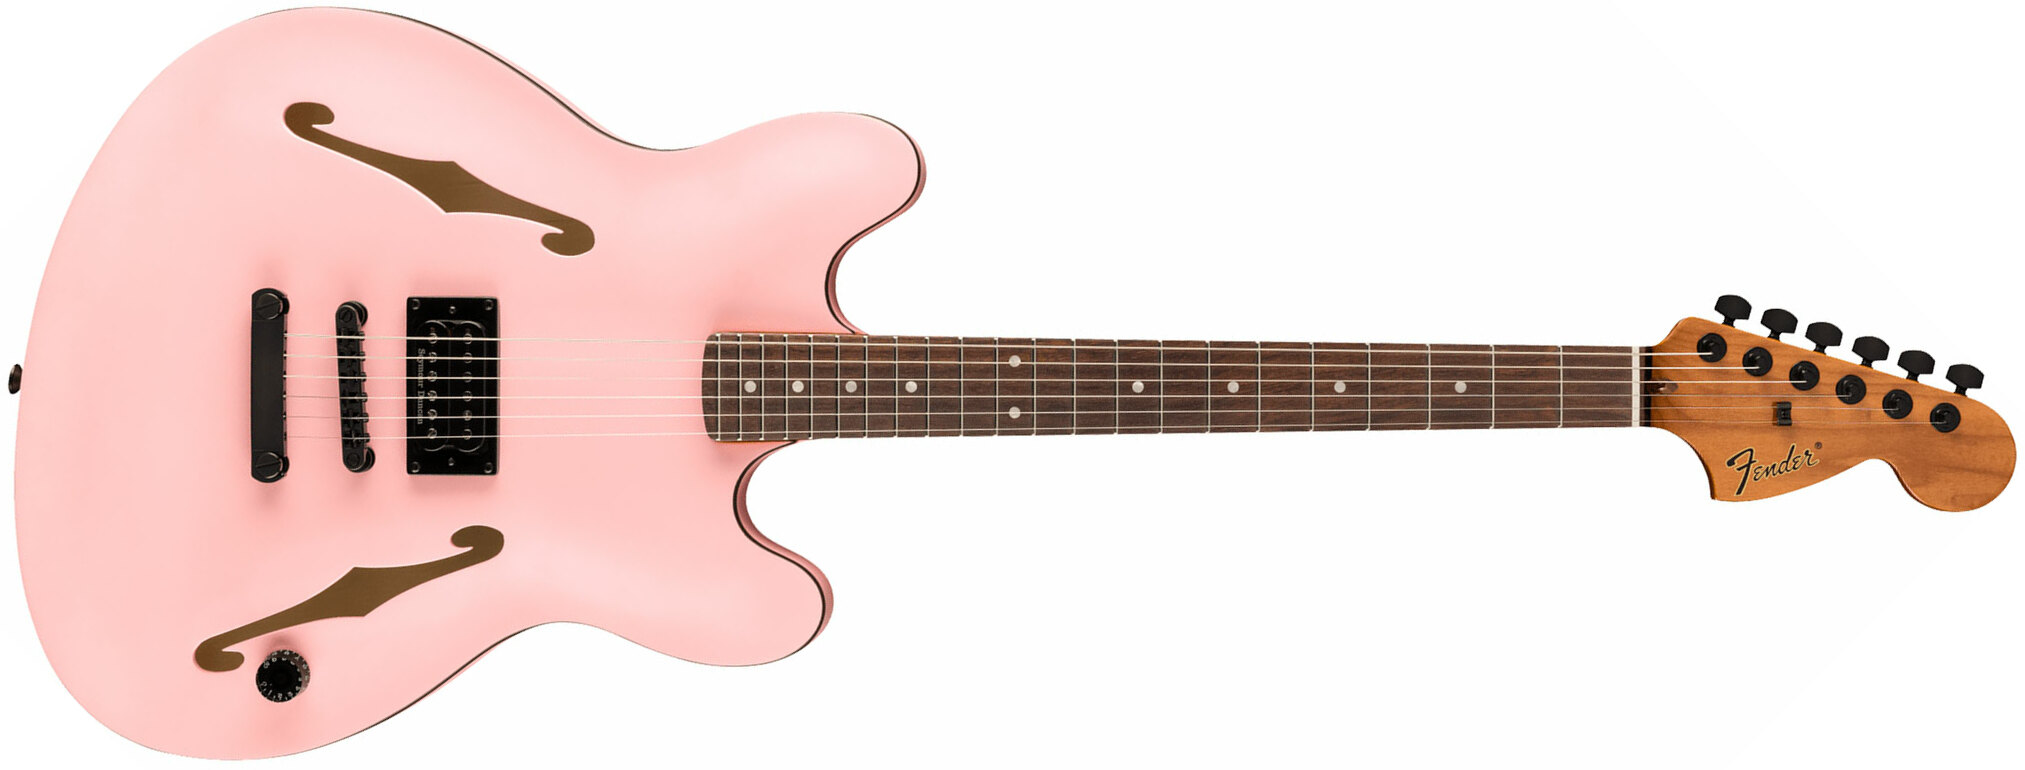 Fender Tom Delonge Starcaster Signature 1h Seymour Duncan Ht Rw - Satin Shell Pink - Semi-Hollow E-Gitarre - Main picture